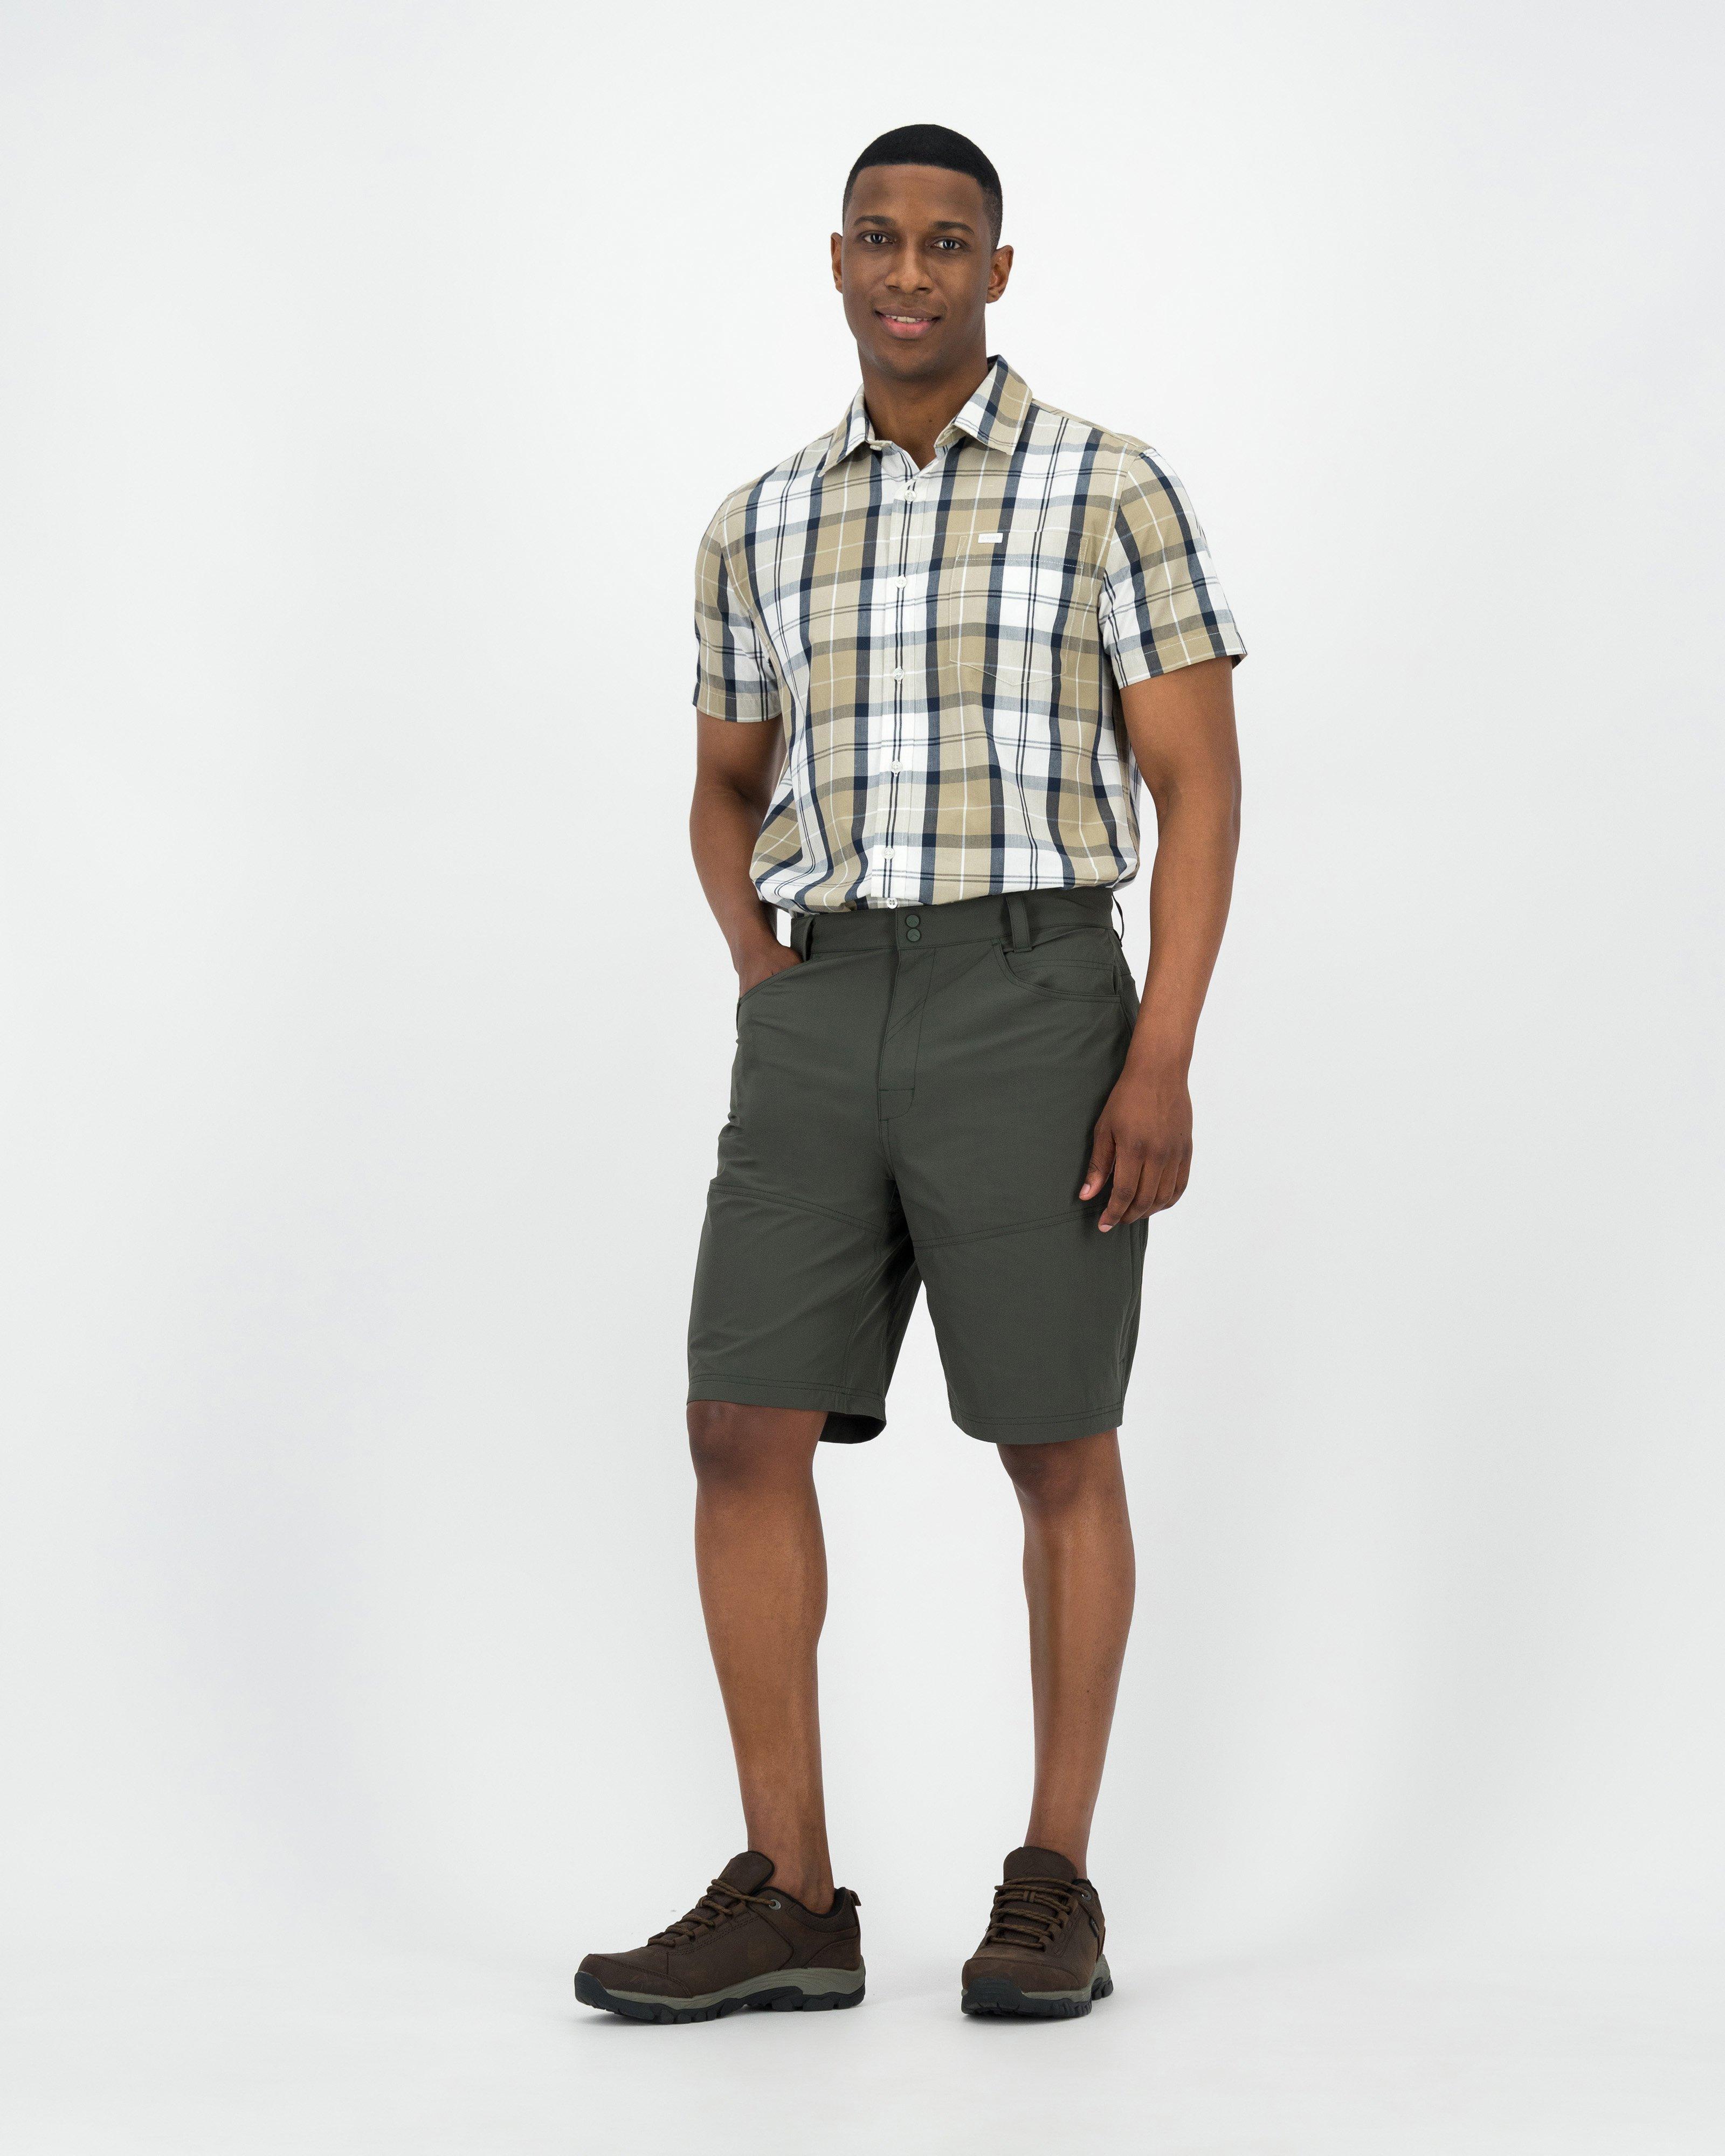 K-Way Men’s Hiker Tech Shorts -  Dark Olive